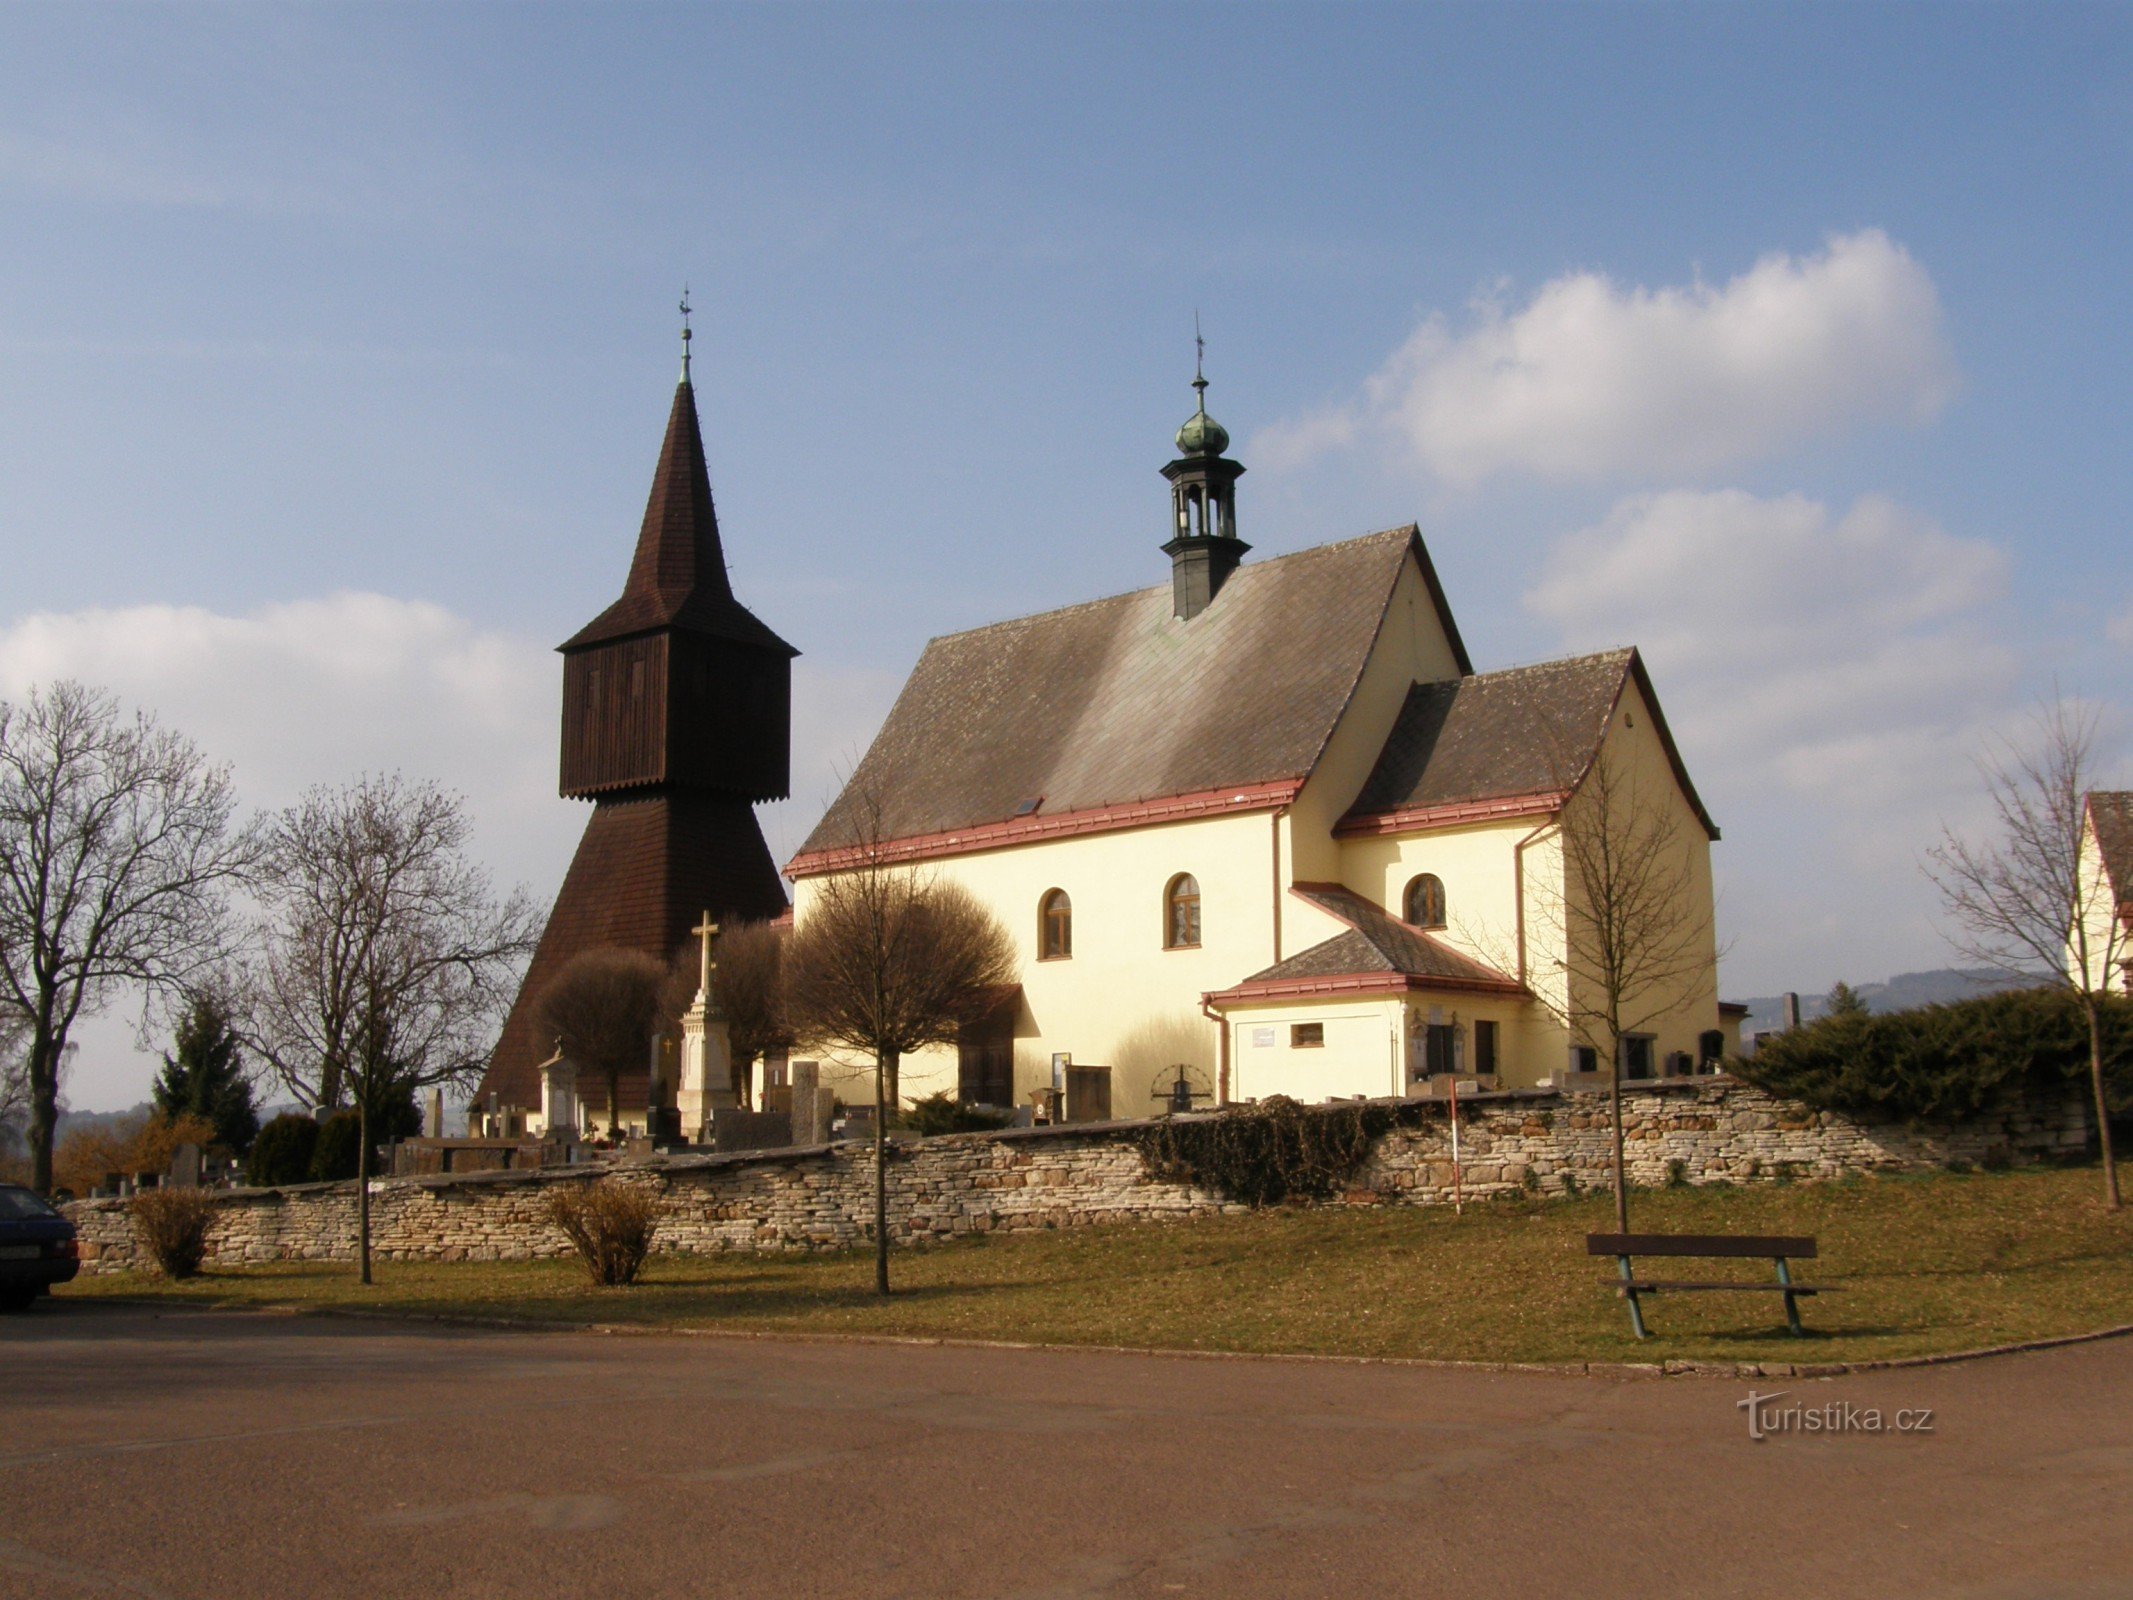 Rtyně στο Podkrkonoší - εκκλησία και καμπαναριό